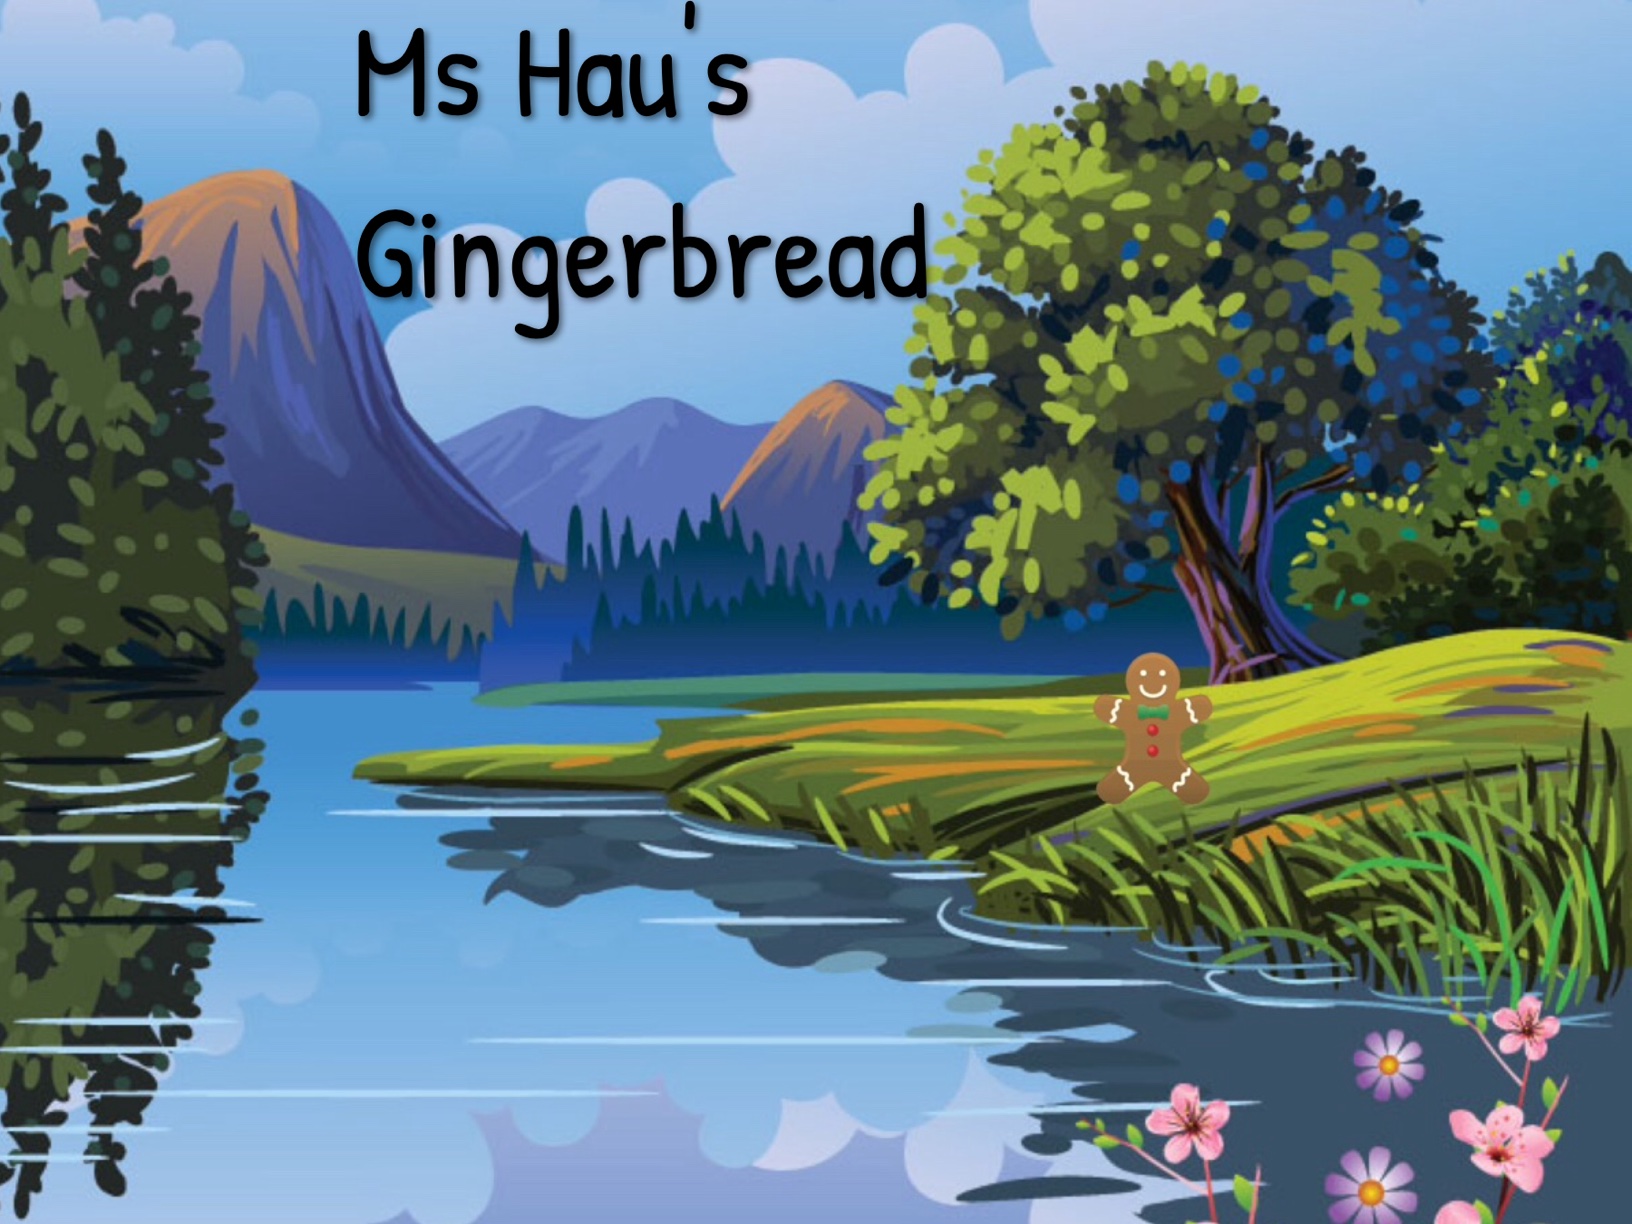 Ms Hau's Gingerbread Story